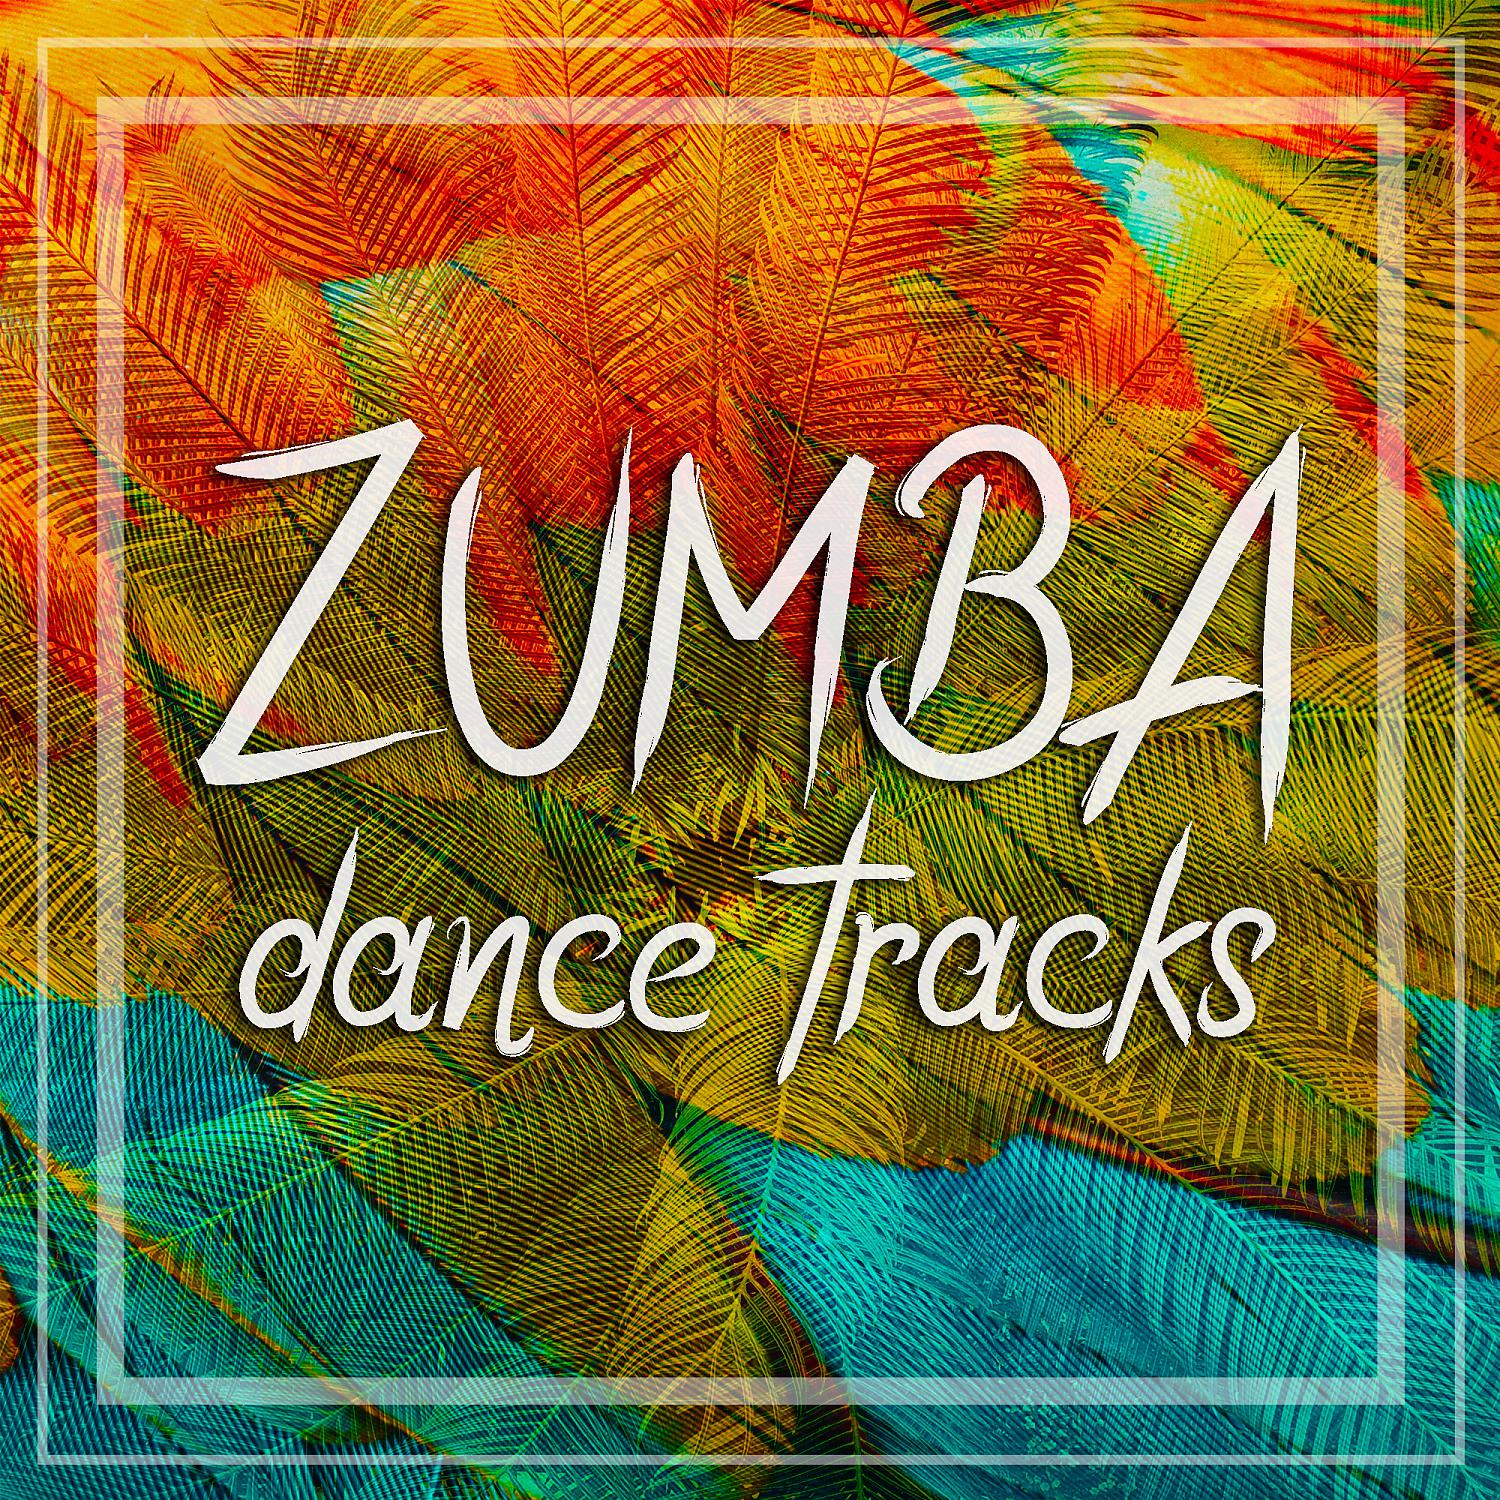 Постер альбома Zumba Dance